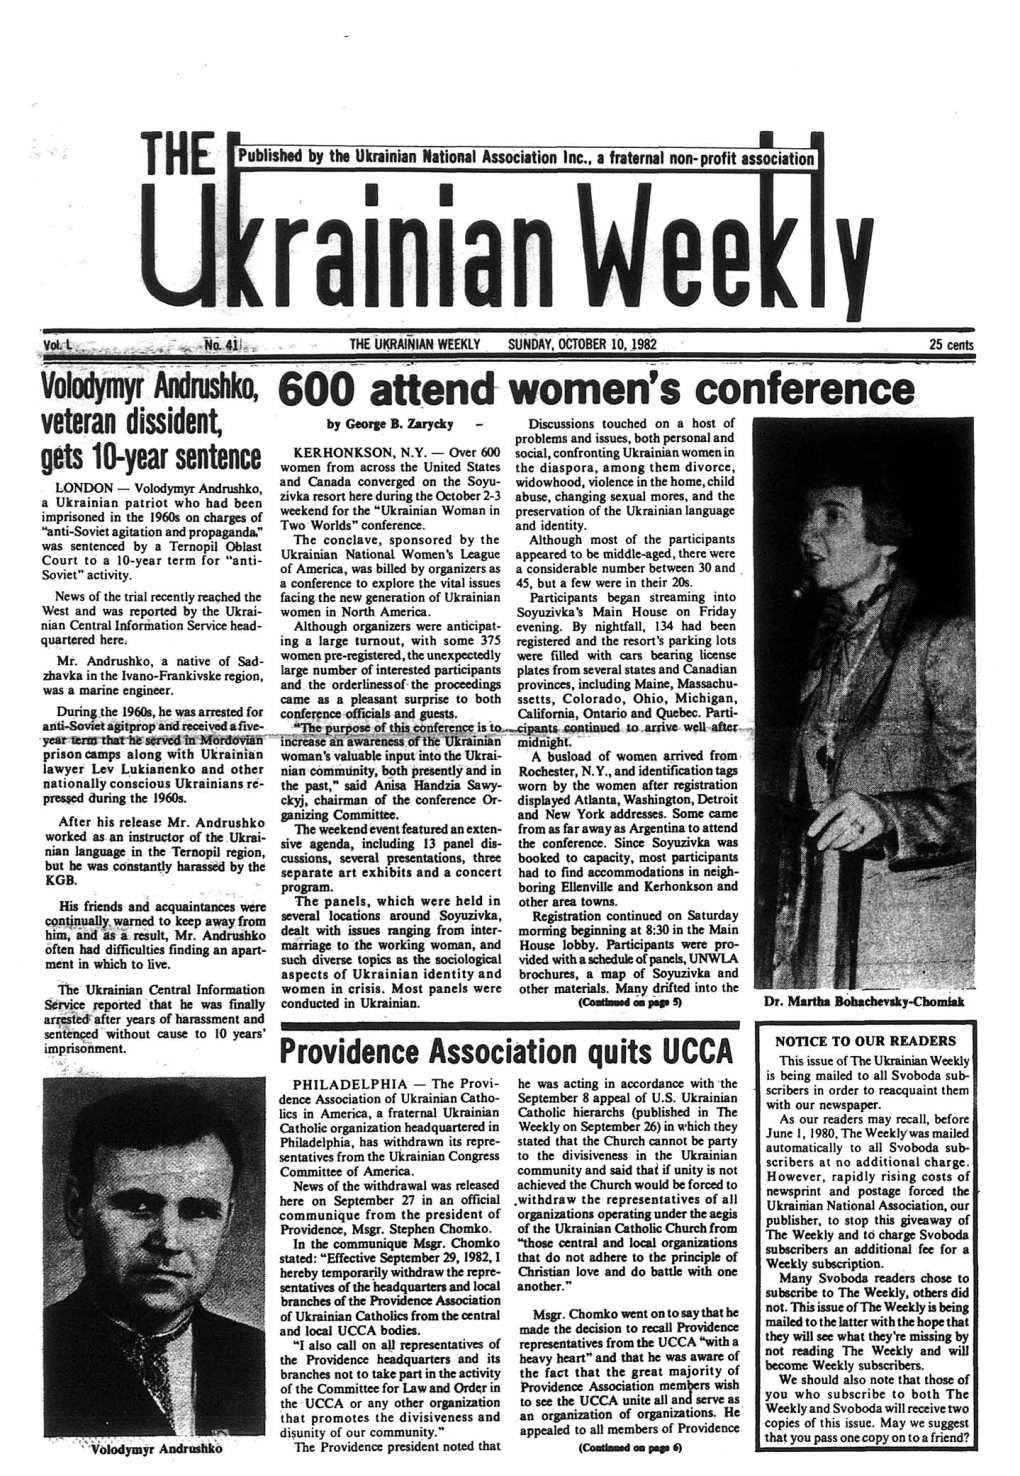 The Ukrainian Weekly 1982, No.41